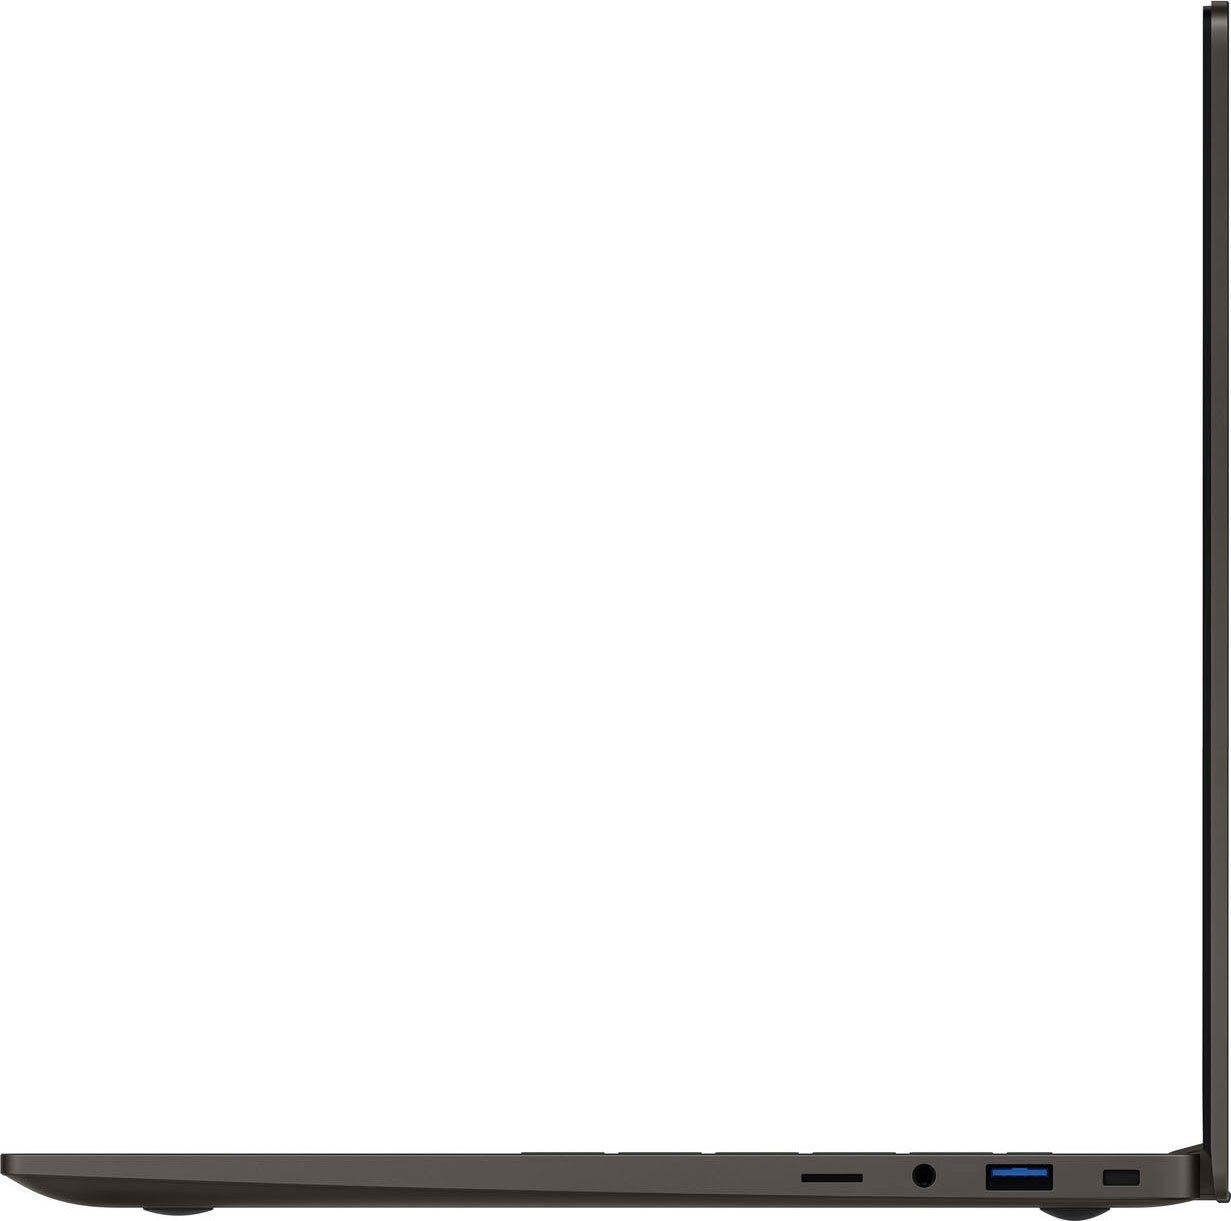 1335U, 512 GB Samsung Notebook (39,6 Zoll, Book3 Core SSD) Xe Galaxy Iris Intel cm/15,6 Graphics, i5